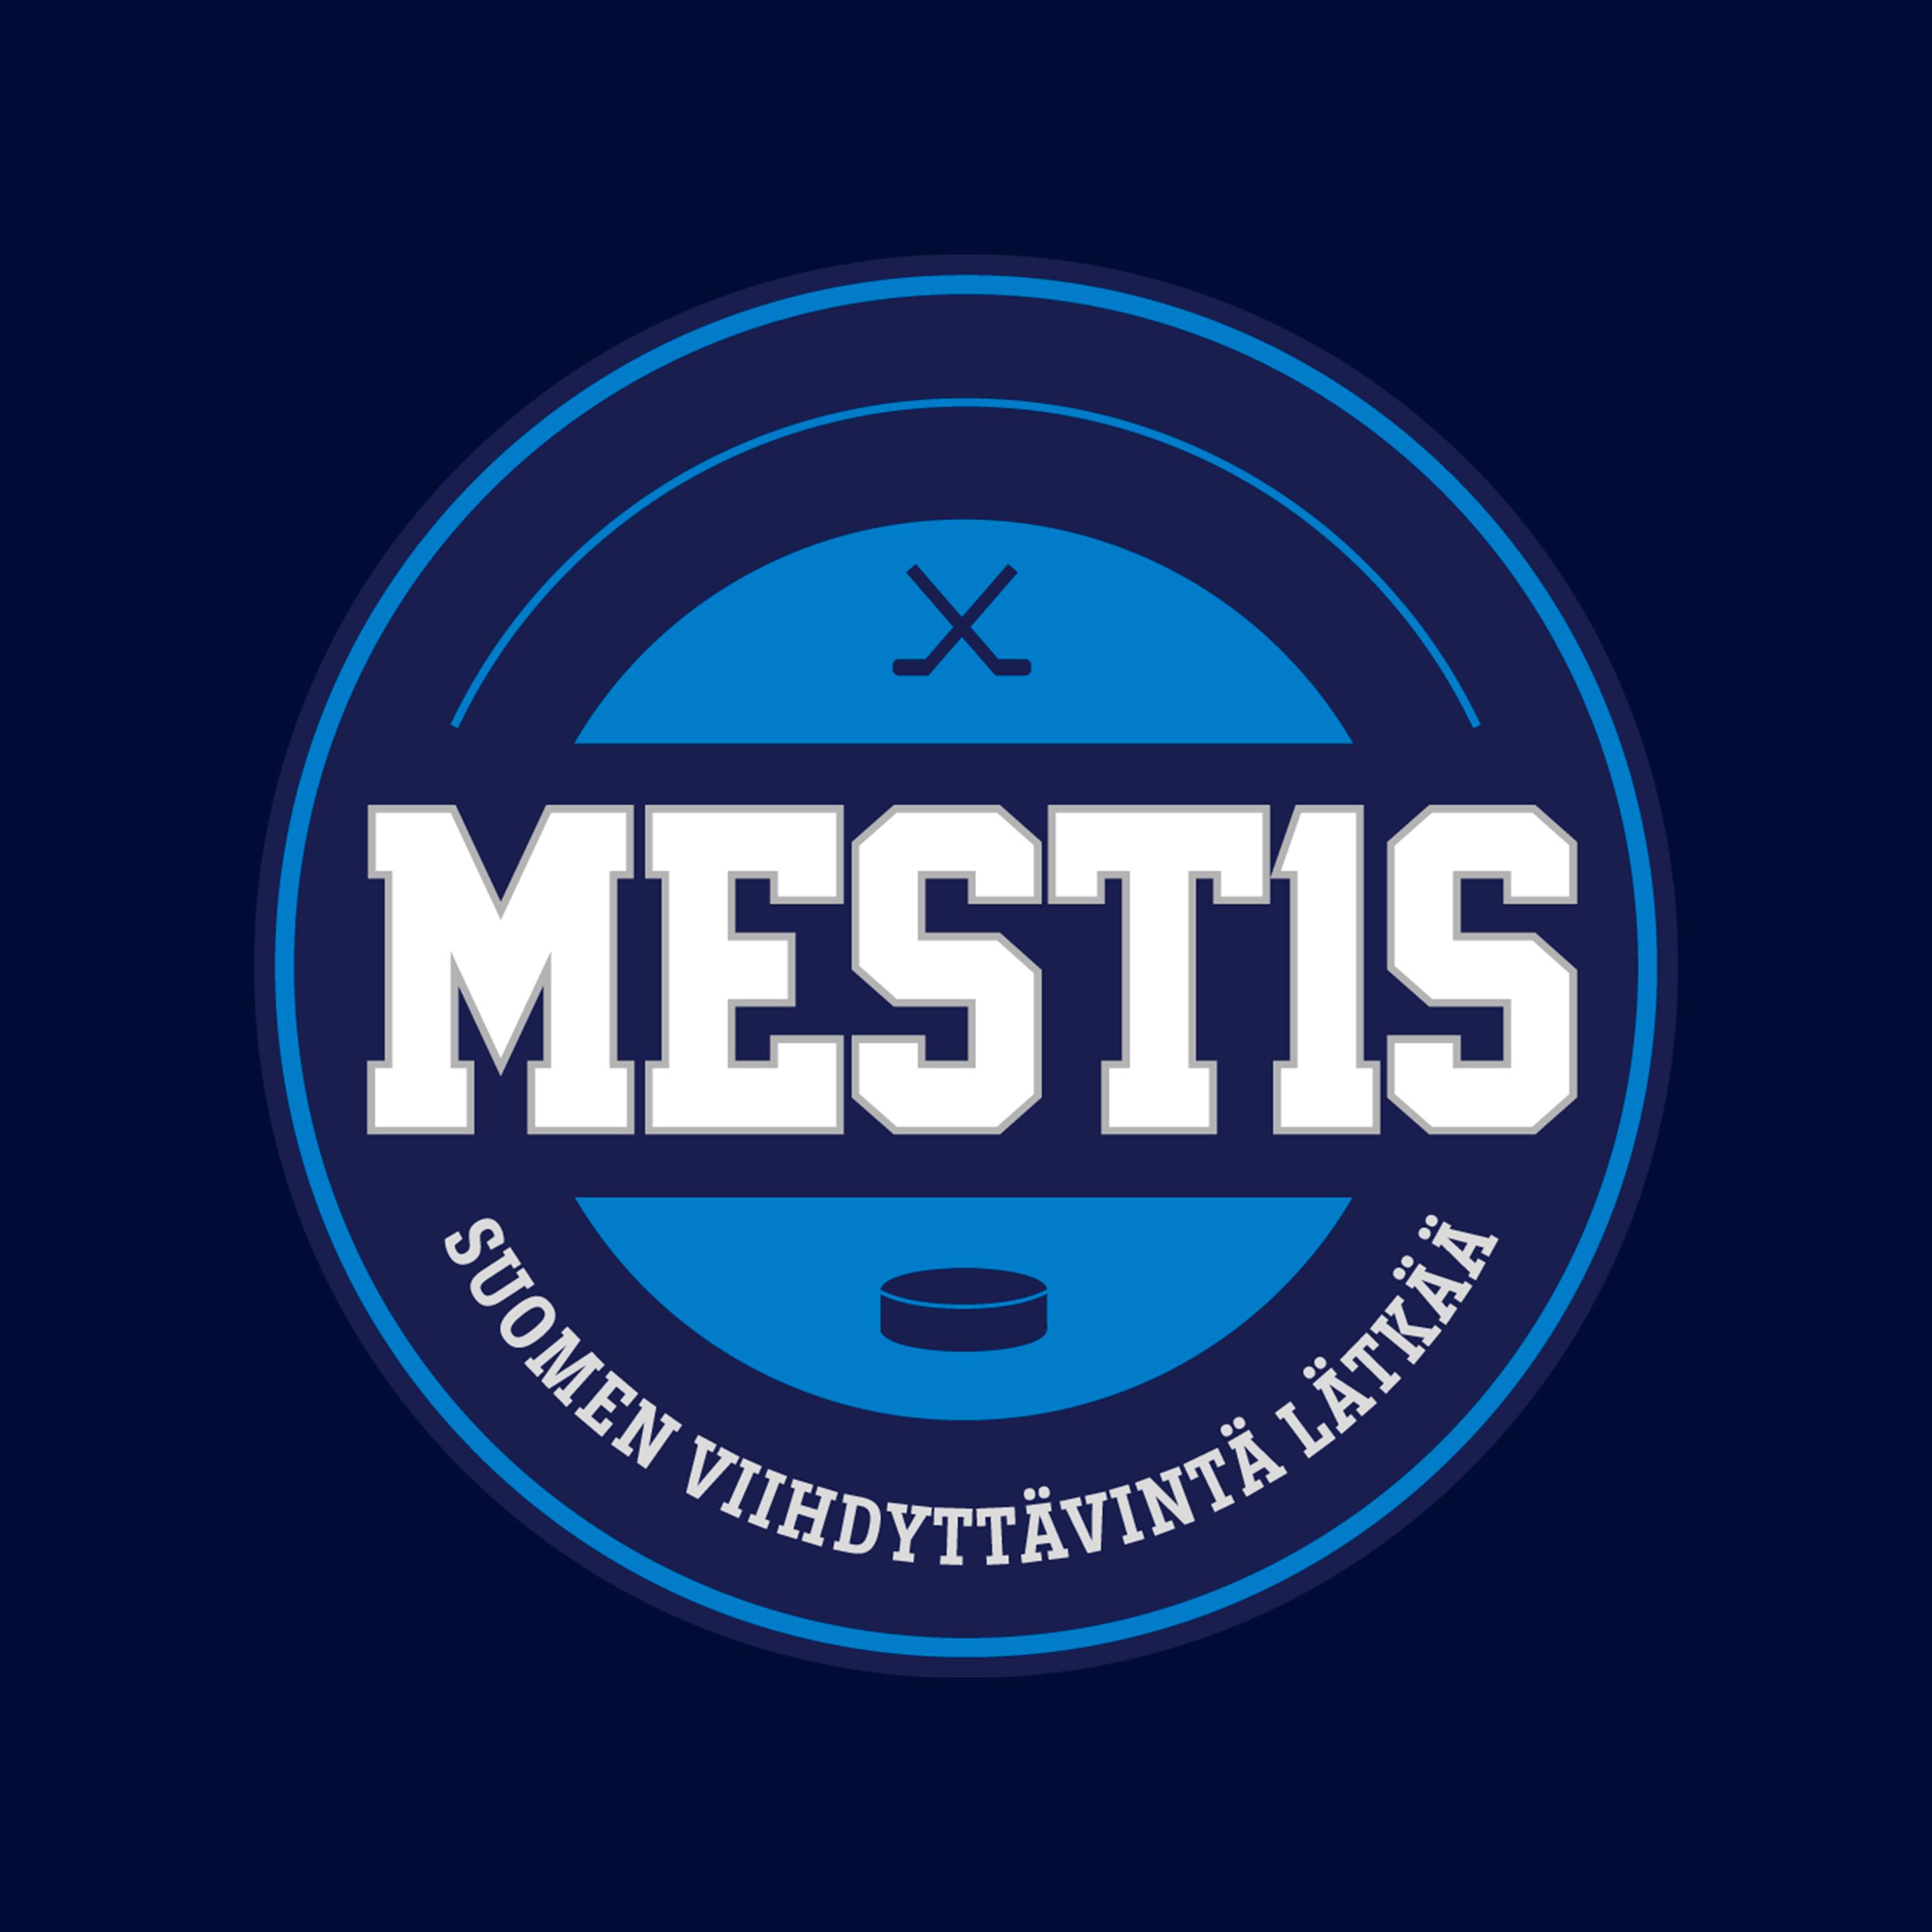 Mestis is back!